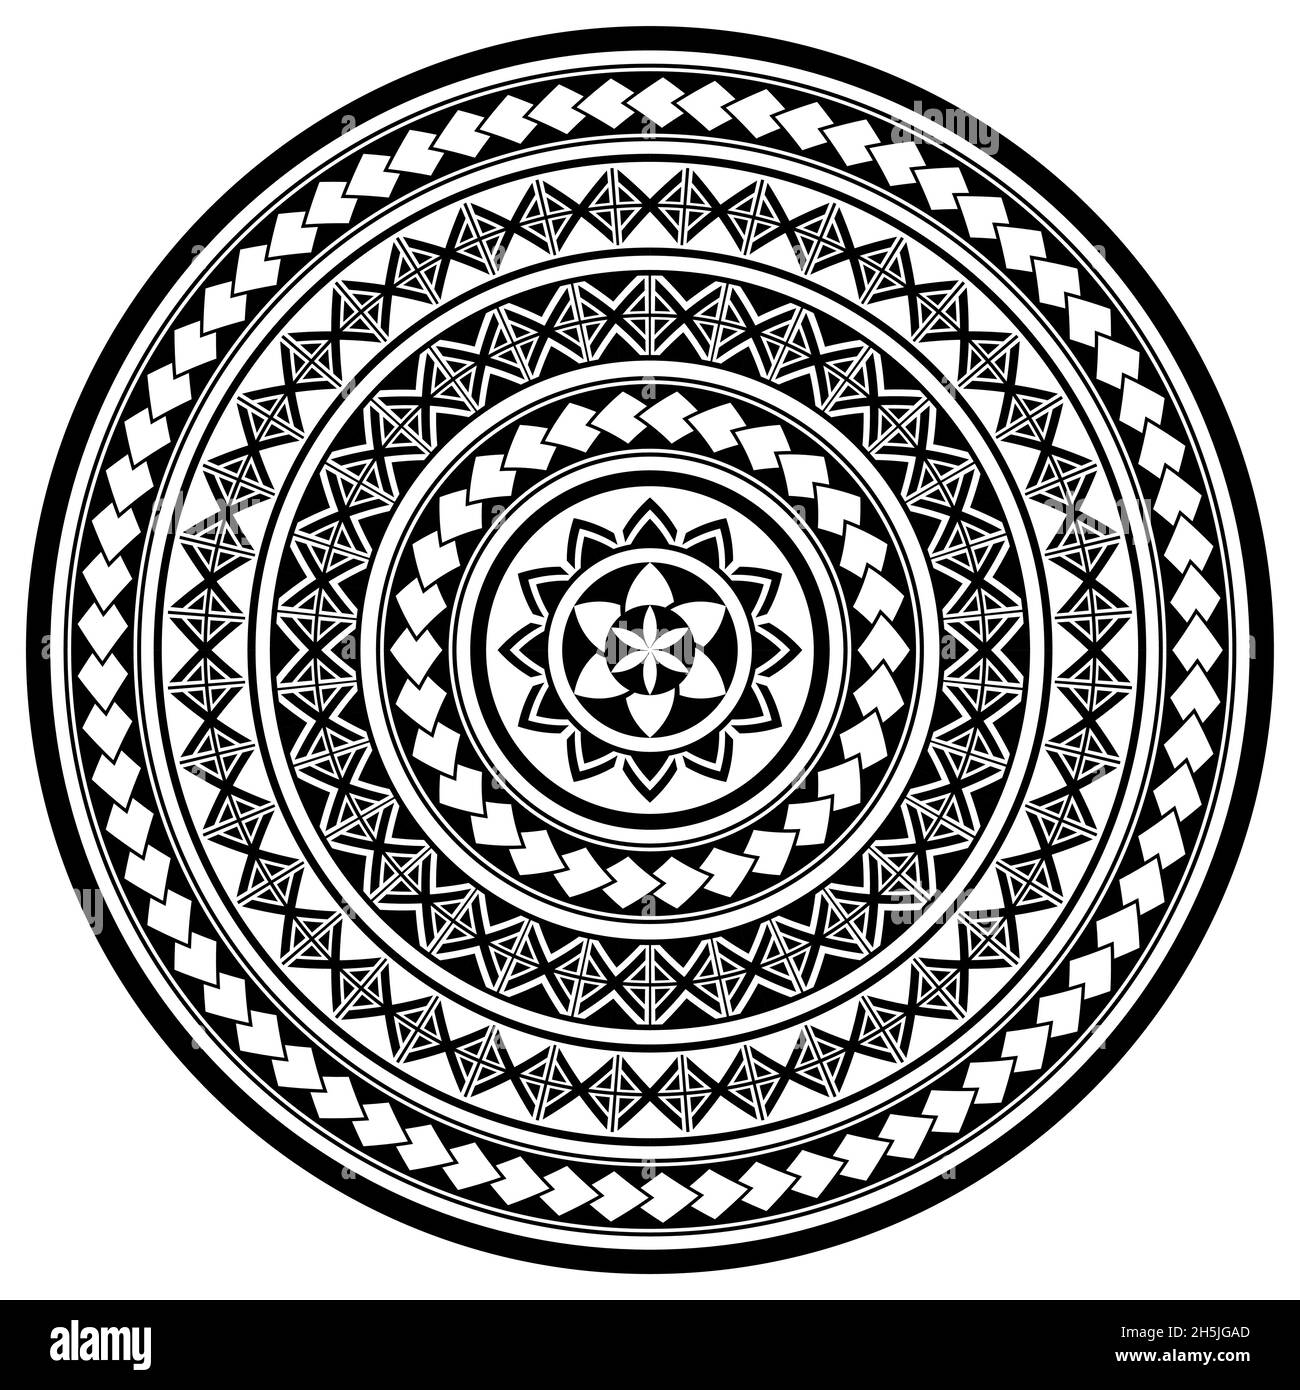 Hawaii Tribal Tattoo Mandala Vektor Muster, Poylnesian Volkskunst rund Design in schwarz und weiß Stock Vektor